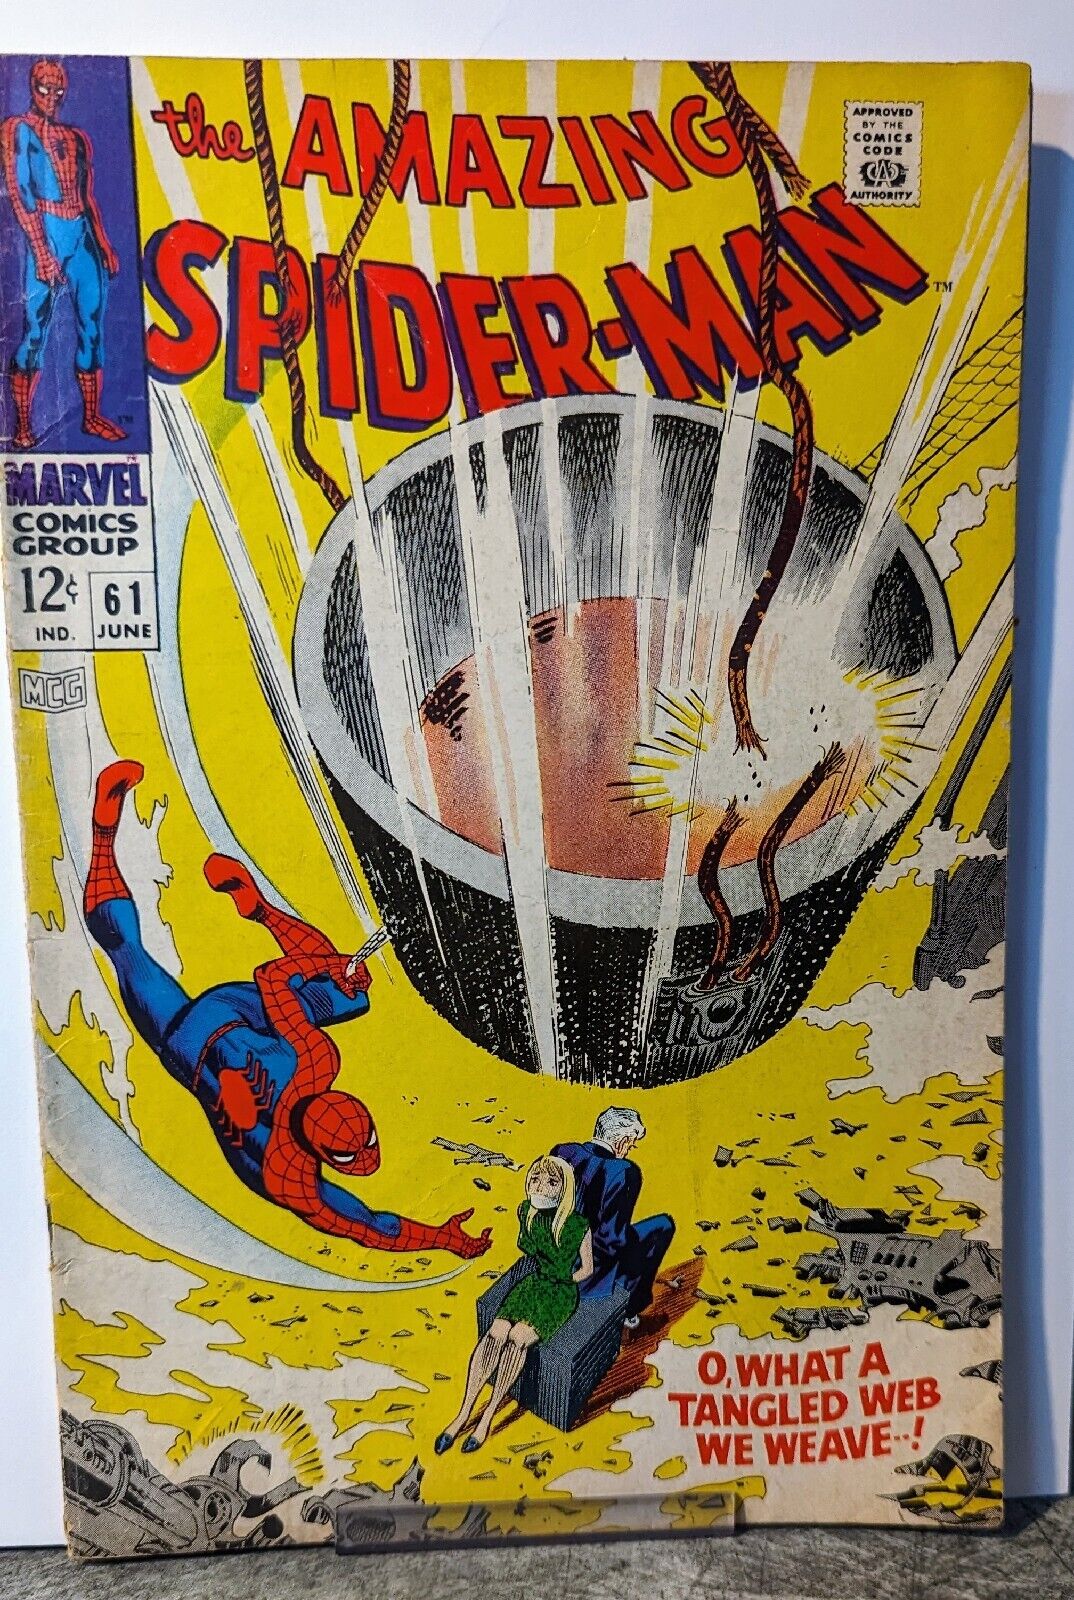 The Amazing Spider-Man, Vol. 1 #61